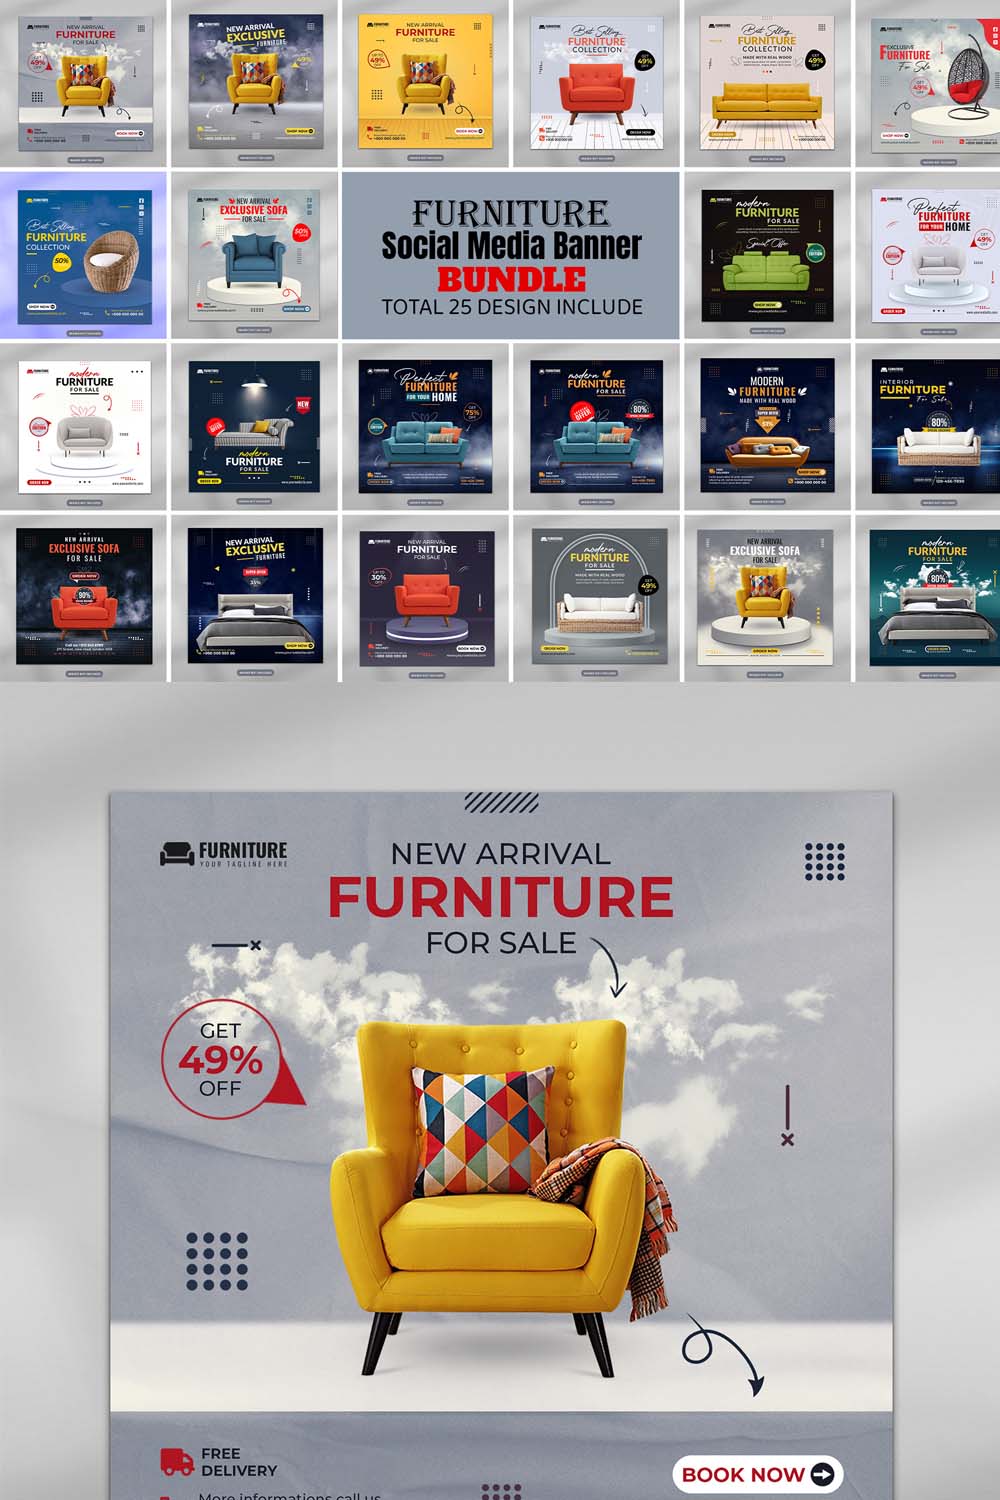 Furniture Social Media Banner Design pinterest preview image.